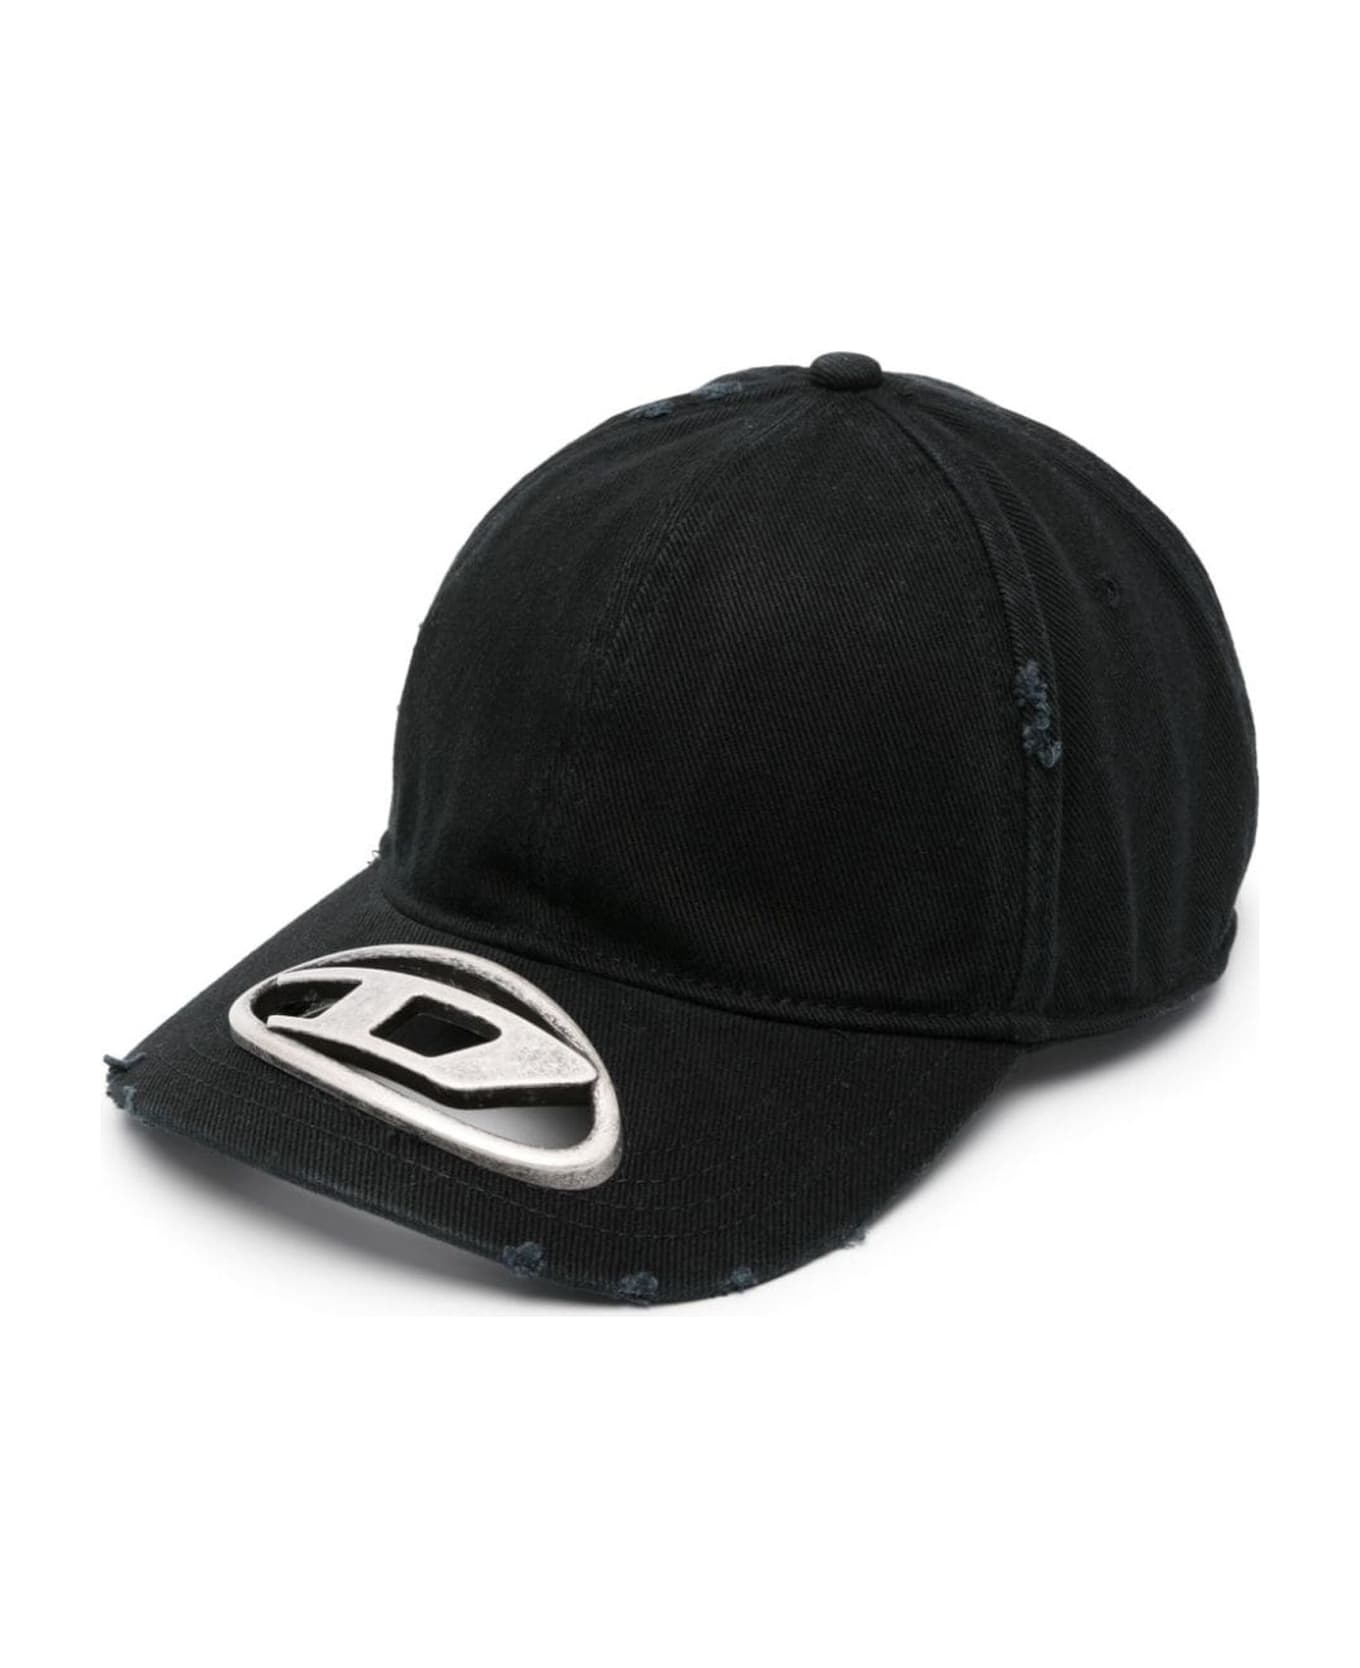 Diesel Hats Black - Xx Black 帽子